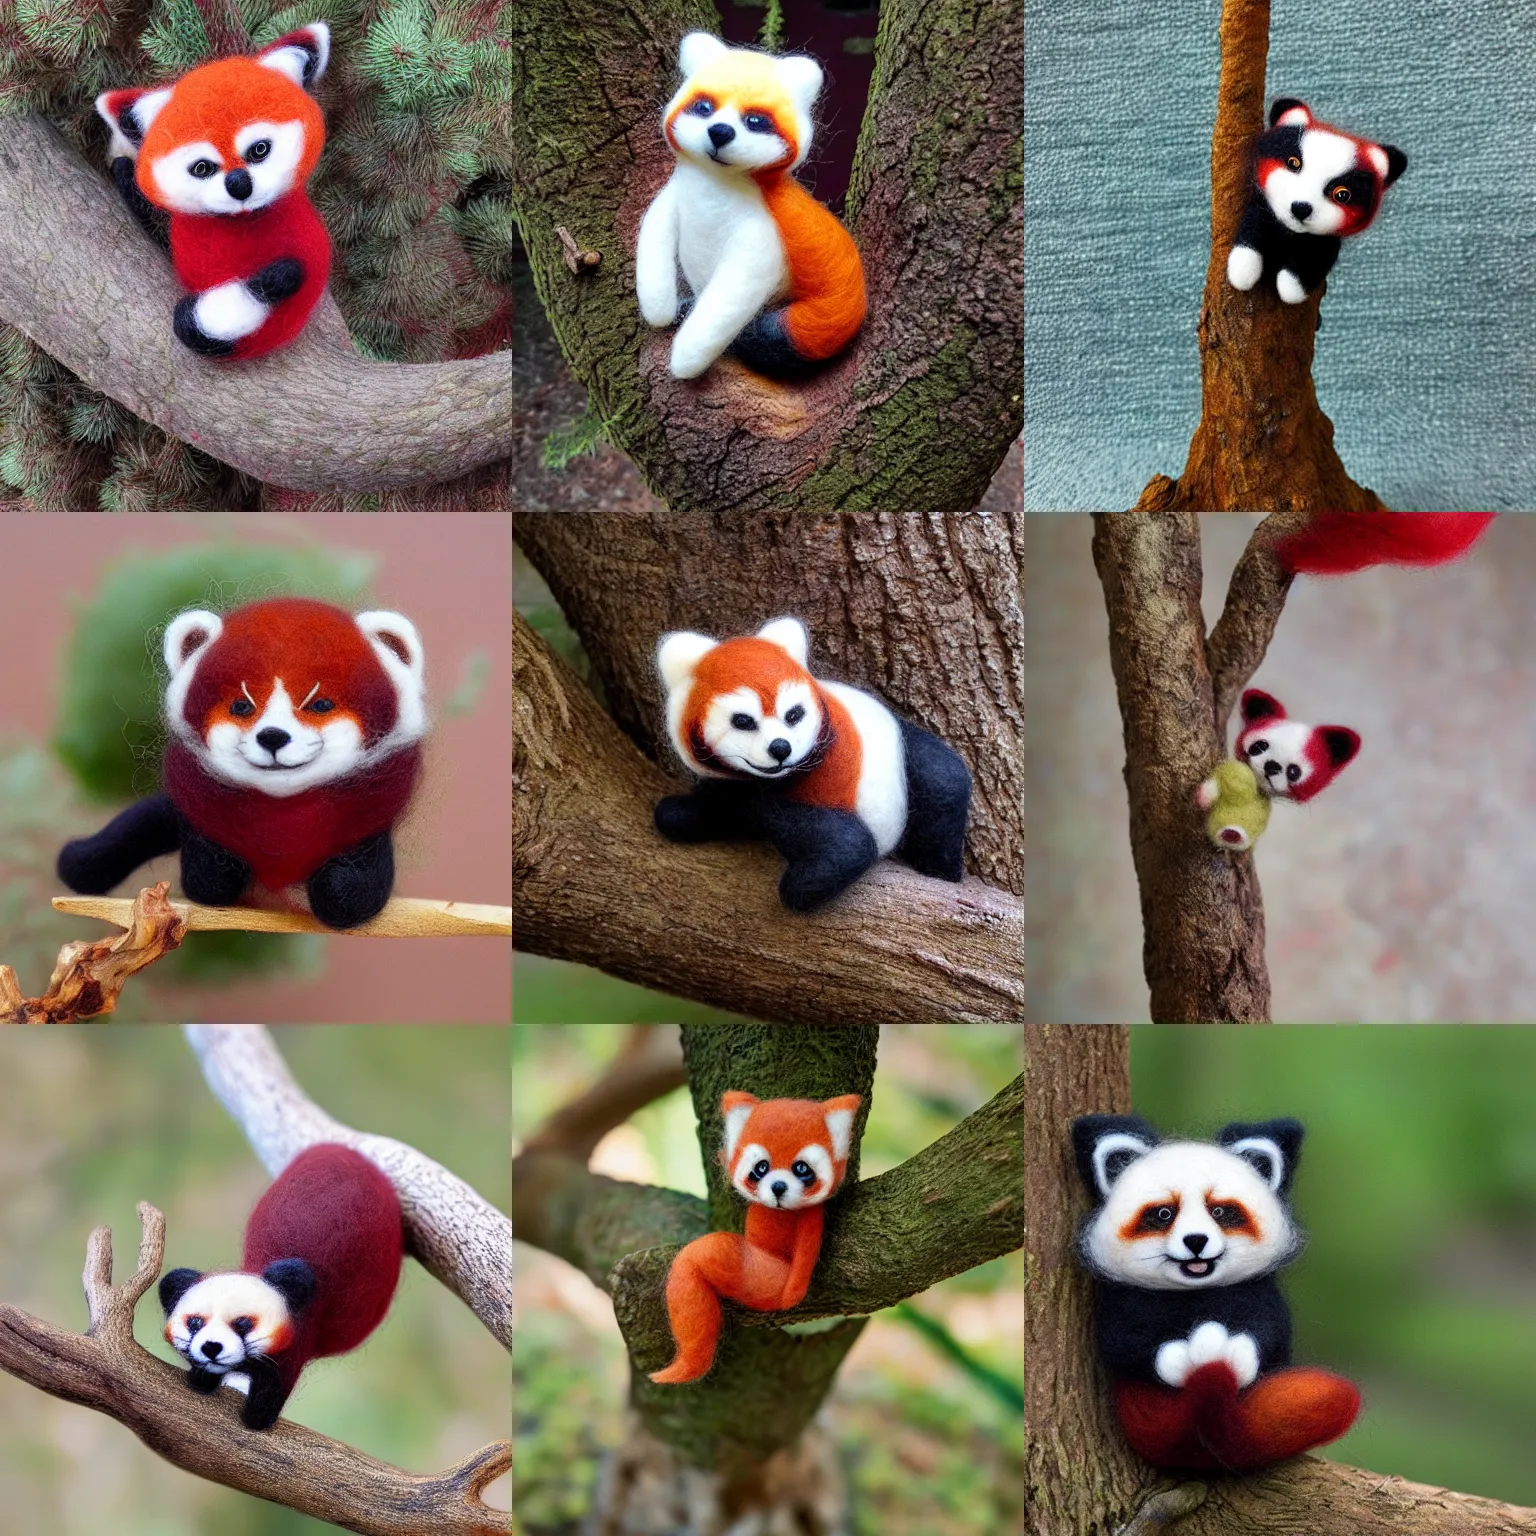 Red Panda Needle Felting Kit – gather here online